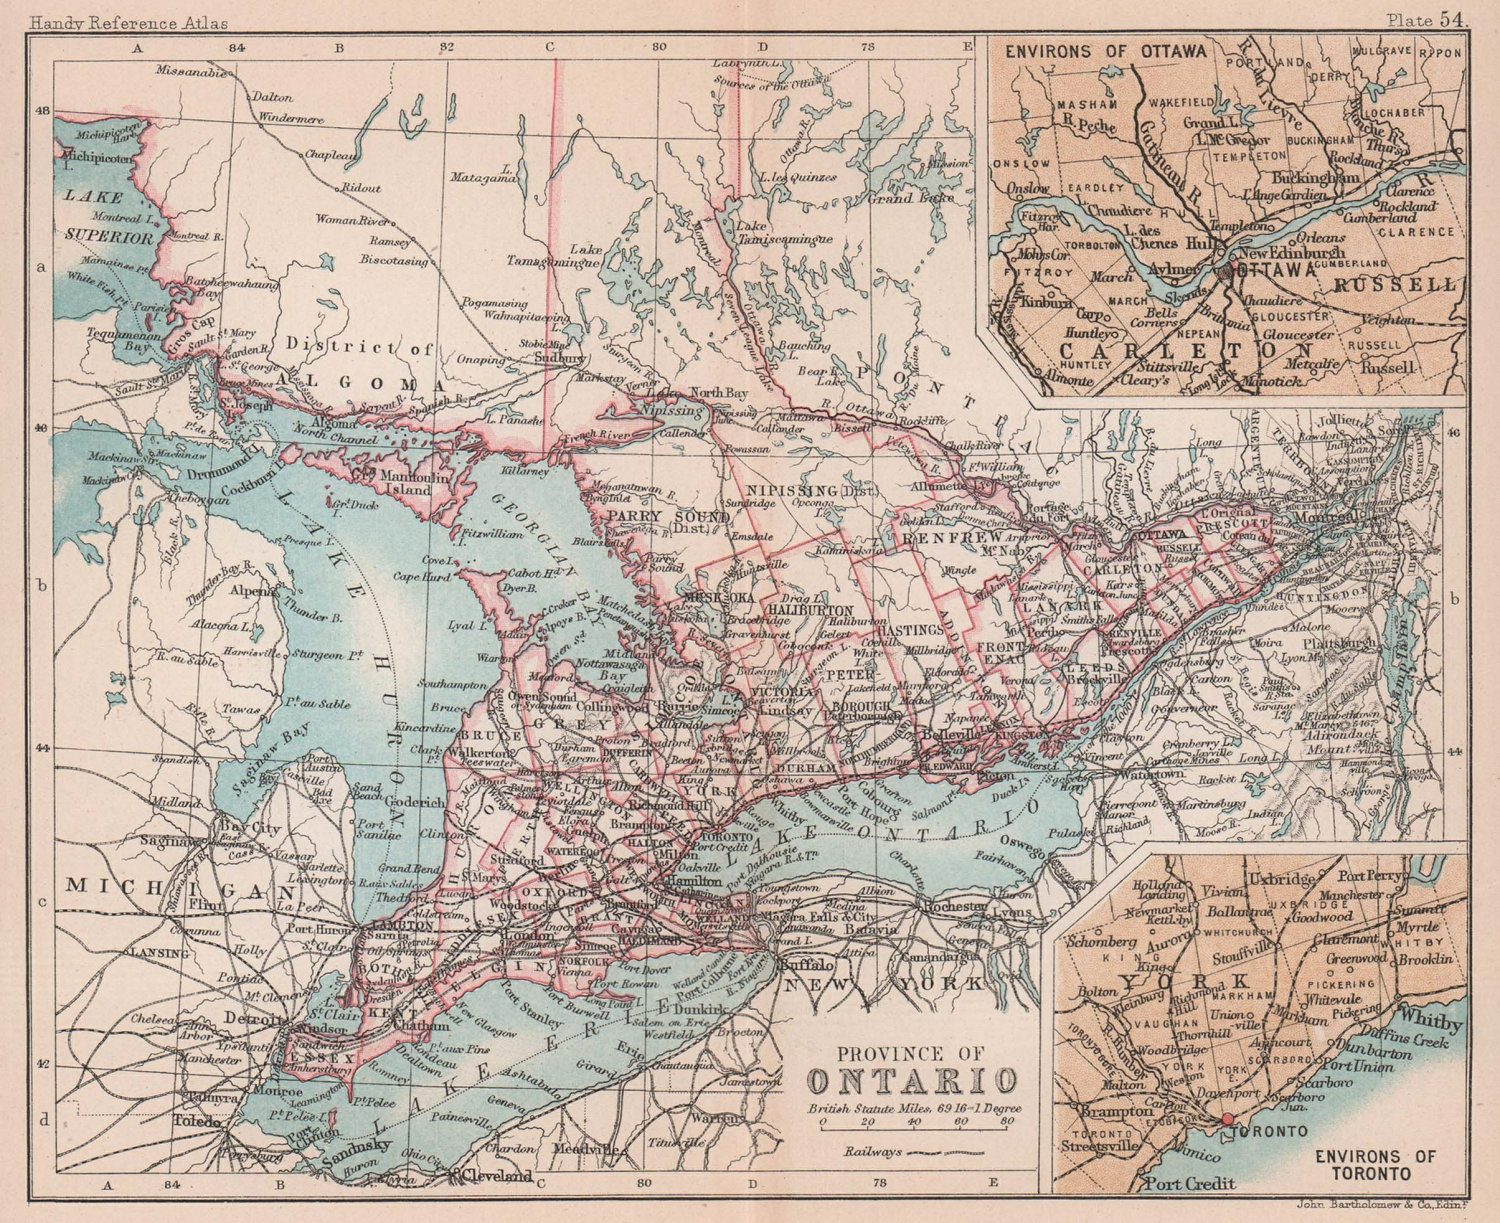 Ontario Province. Ottawa & Toronto environs. Canada. BARTHOLOMEW 1888 old map